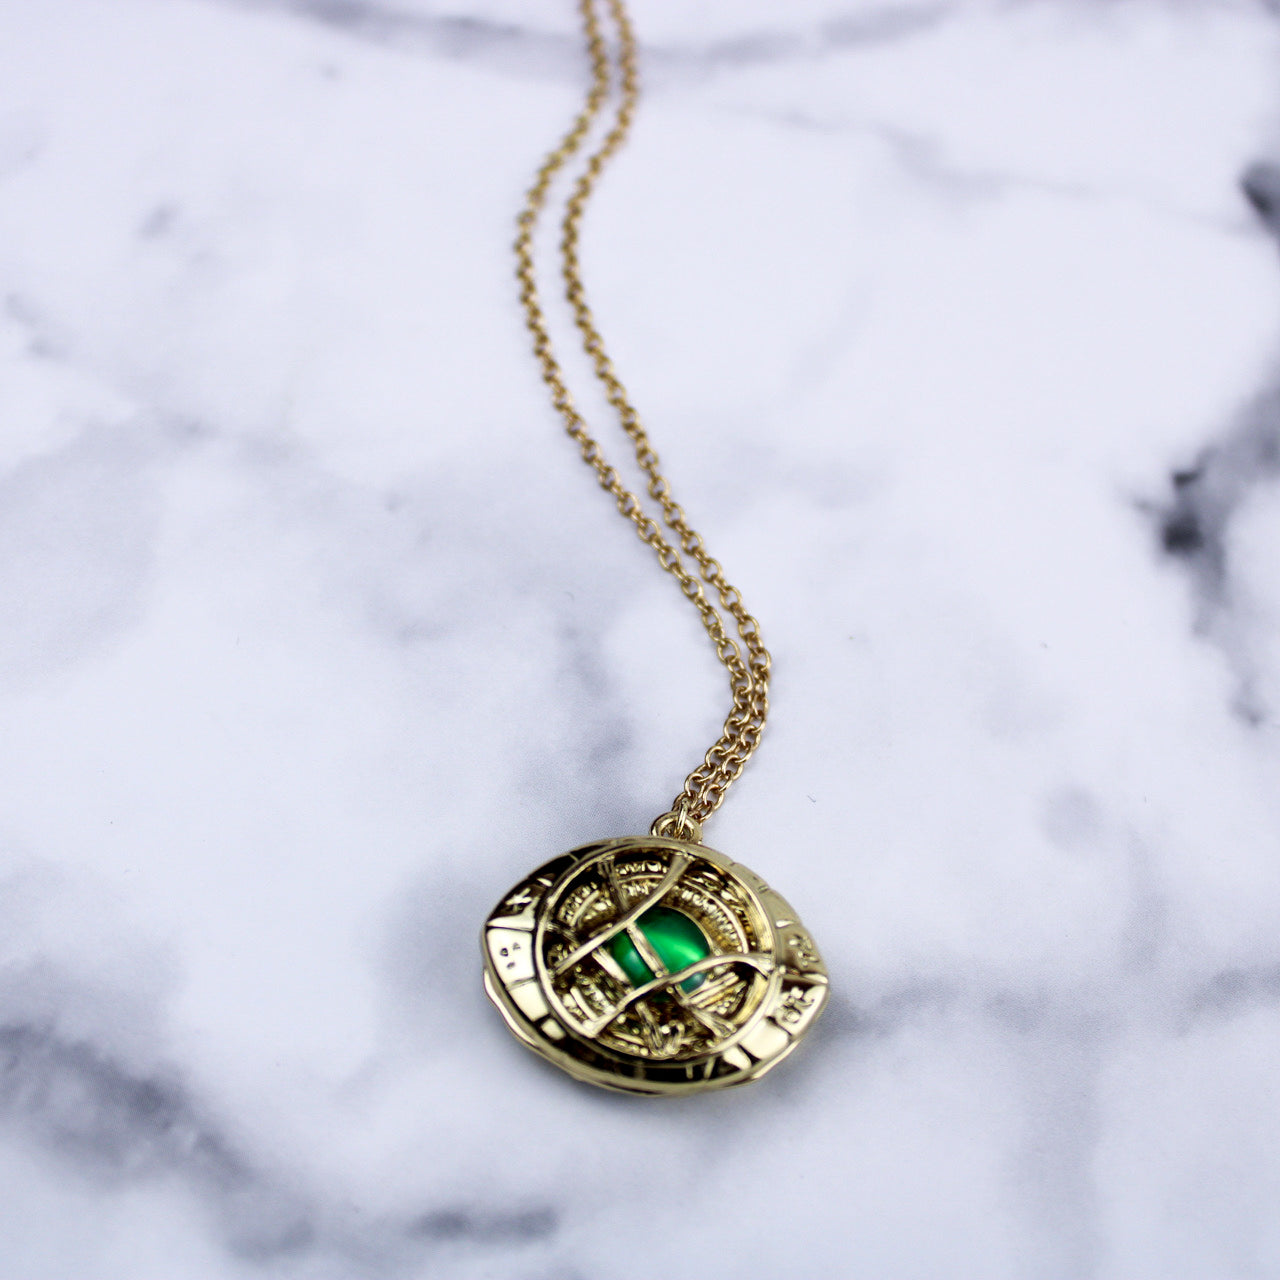 Antique Luminous Doctor Strange Agamotto Eye Pendant Necklace Jewelry Gift  zhangxin | Lazada PH